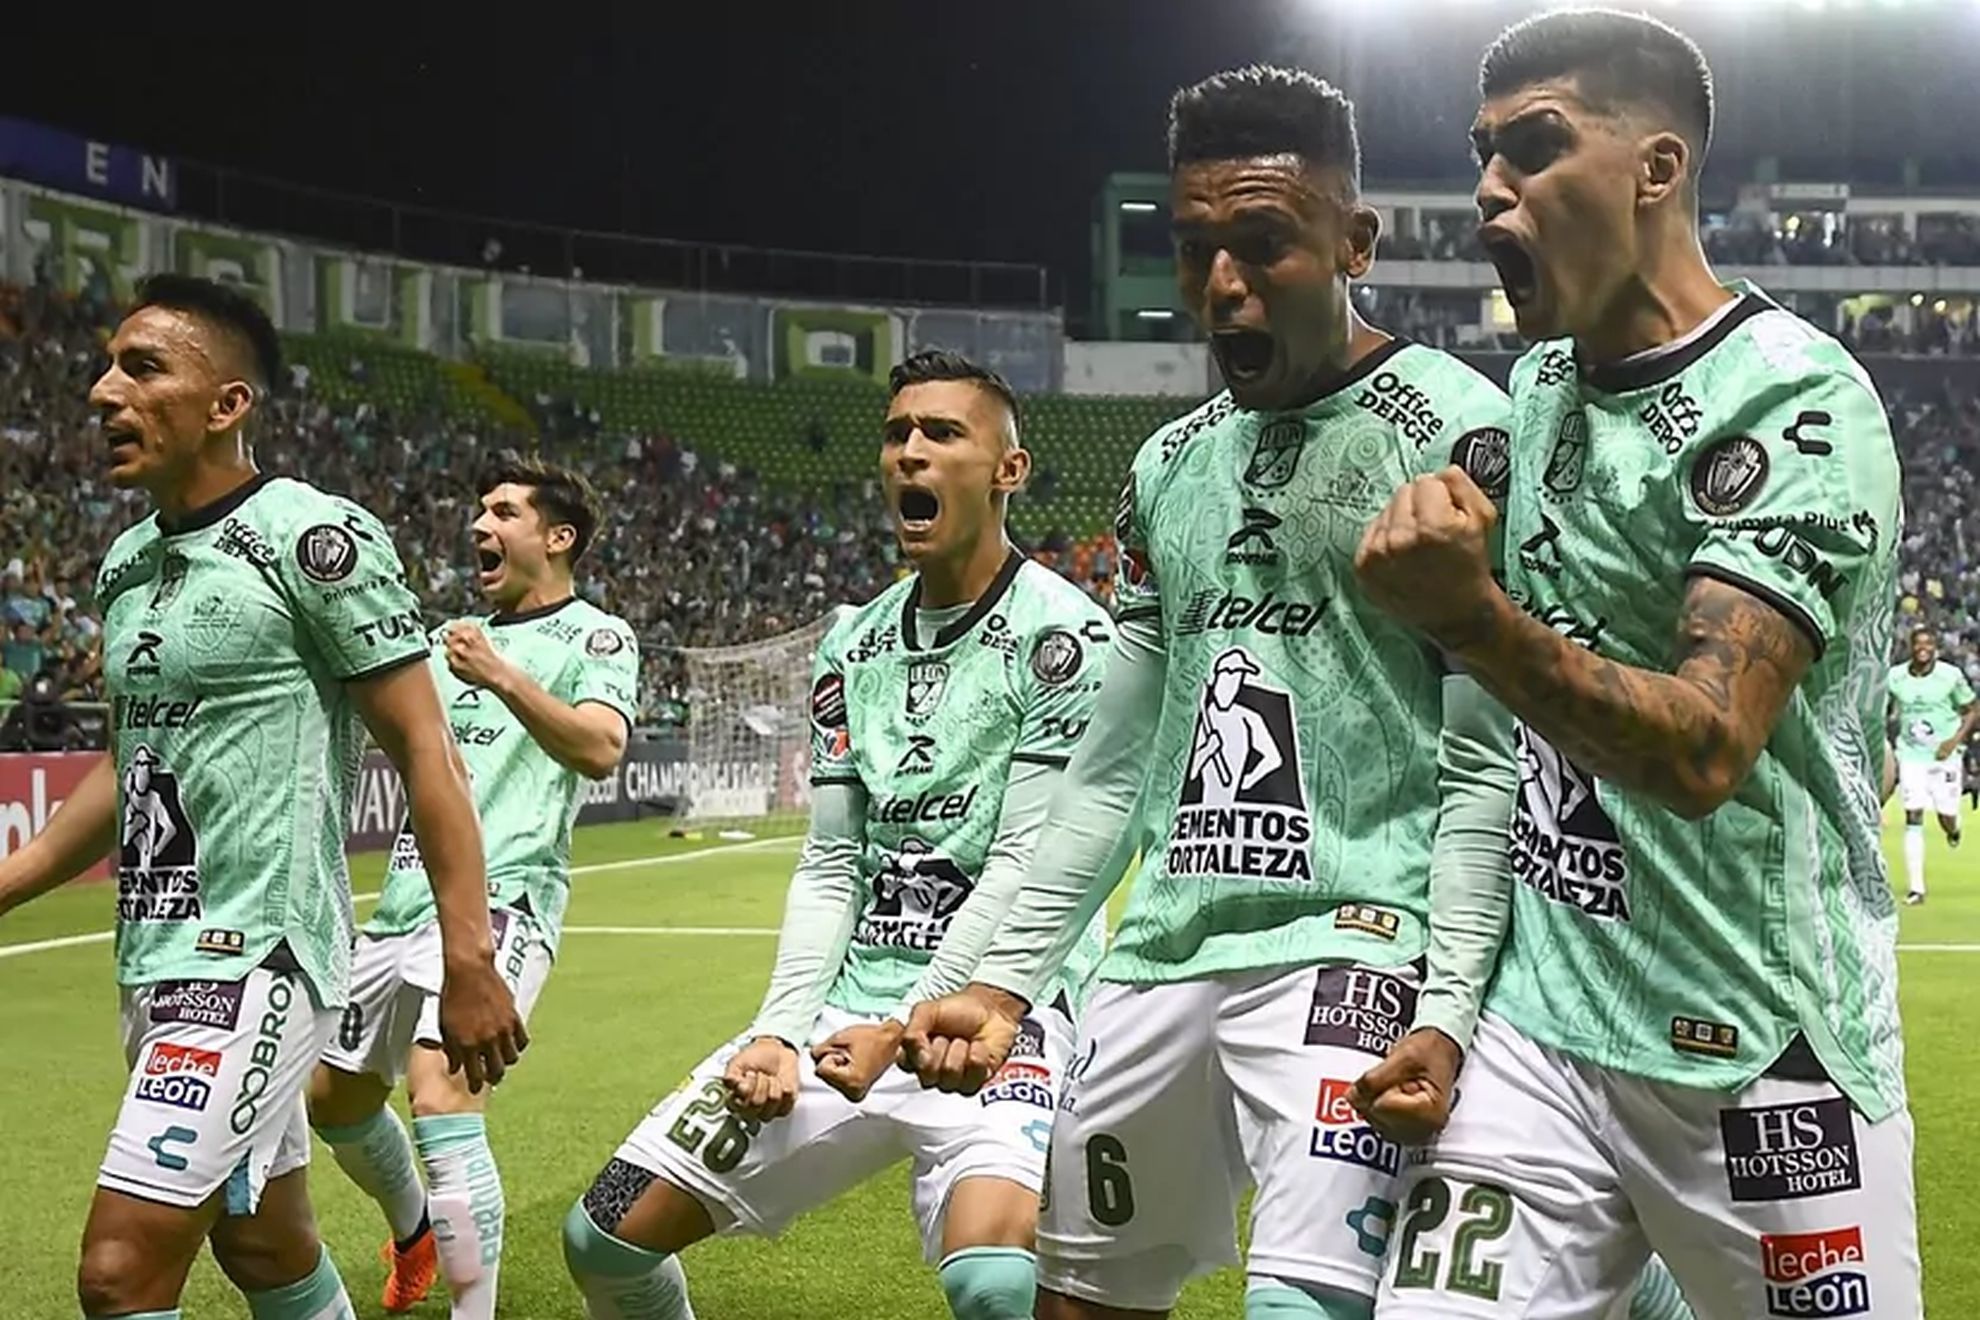 Leon defeat Carlos Velas LAFC in Concacaf Champions League final first leg